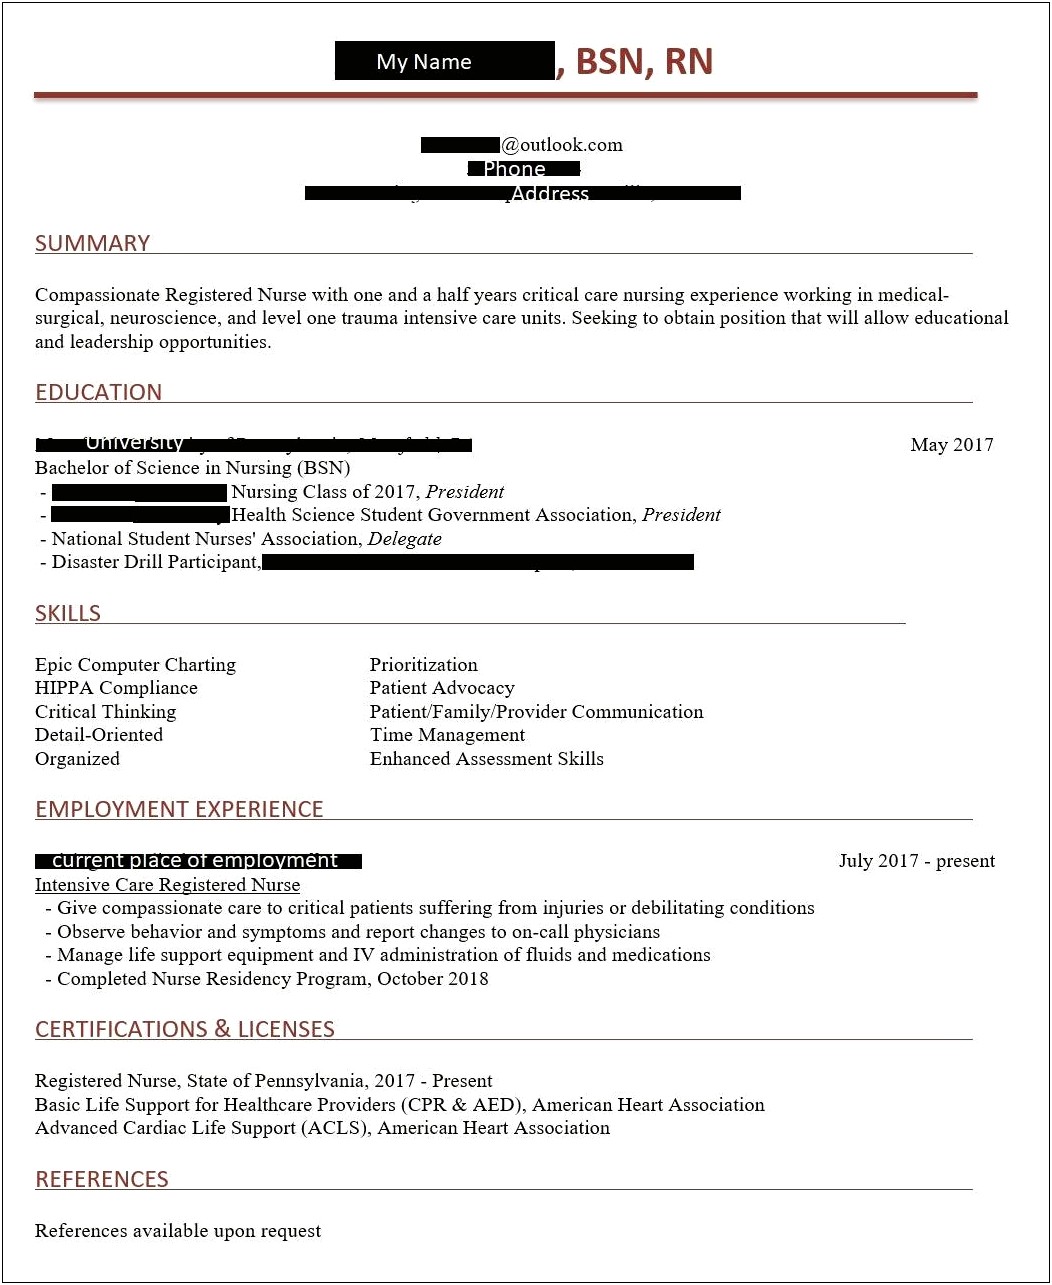 Professional Summary For Registered Nurse Med Surg Resume